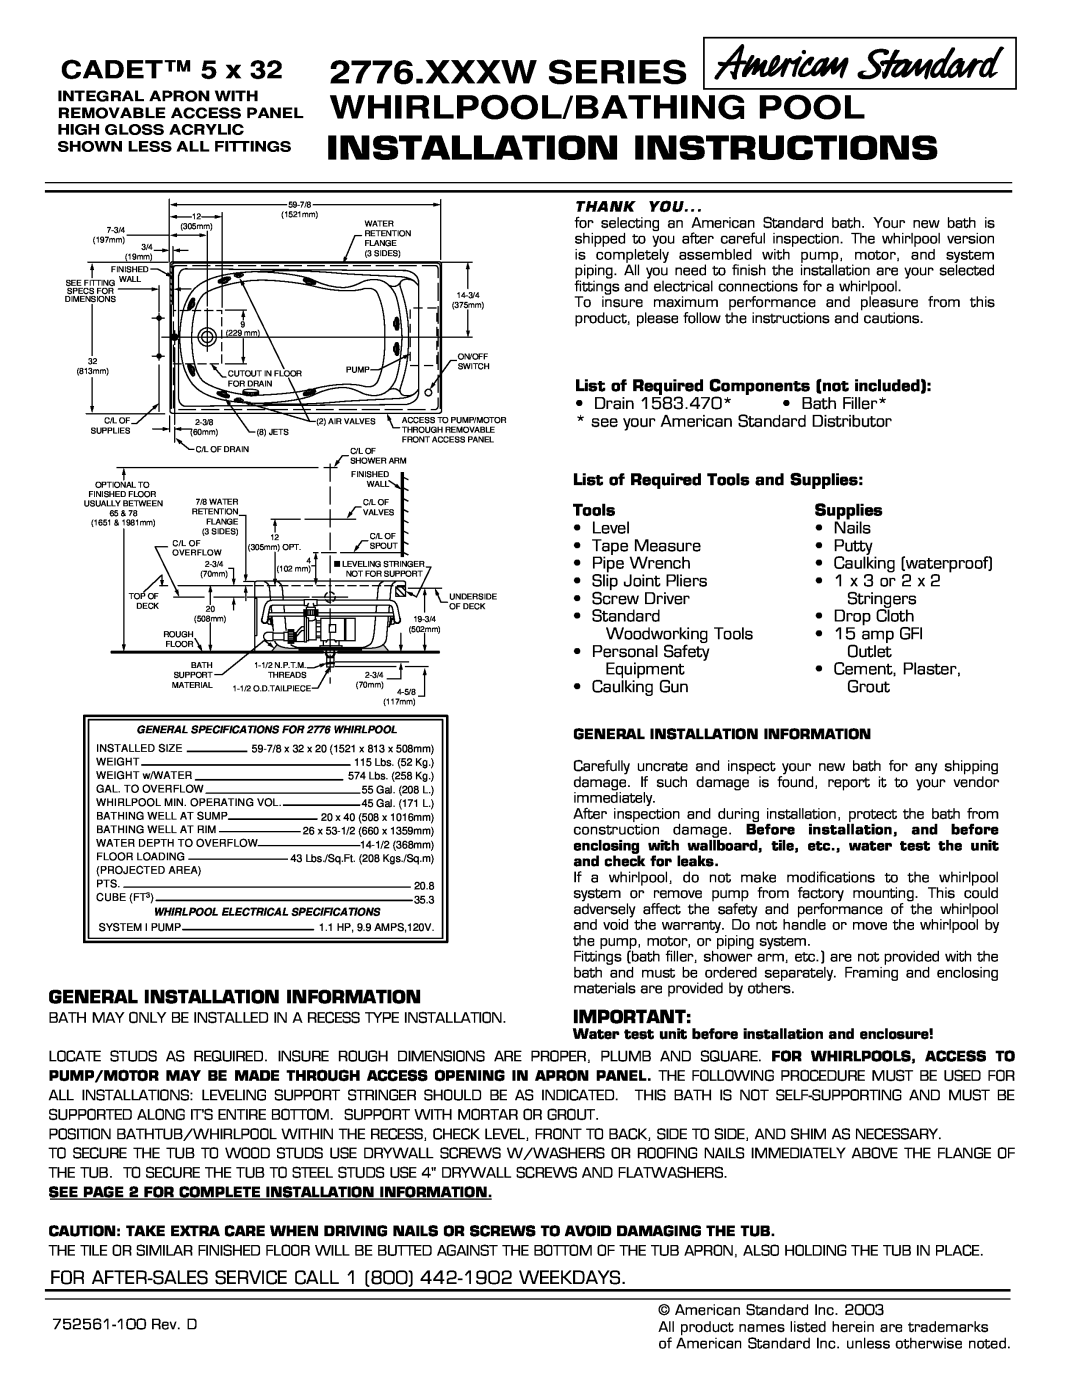 American Standard 2776.XXXW Series installation instructions Xxxw Series Whirlpool/Bathing Pool, Installation Instructions 